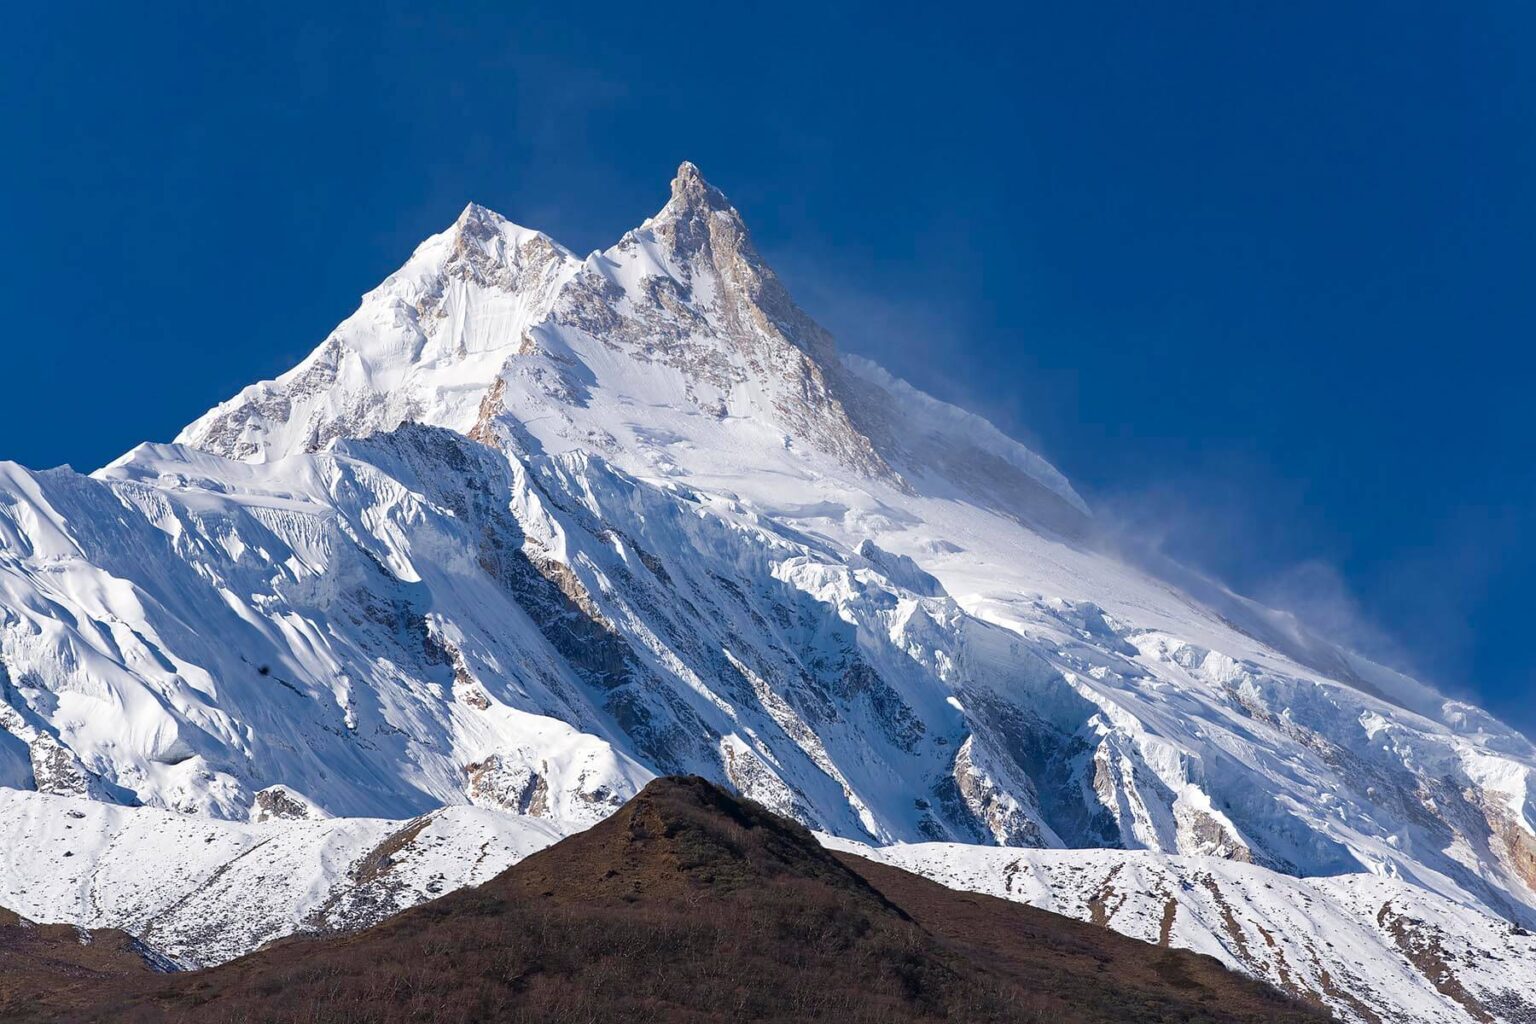 MANASLU PEAK at 26759 is the 8th highest mountain in the world - NUPRI REGION, NEPAL